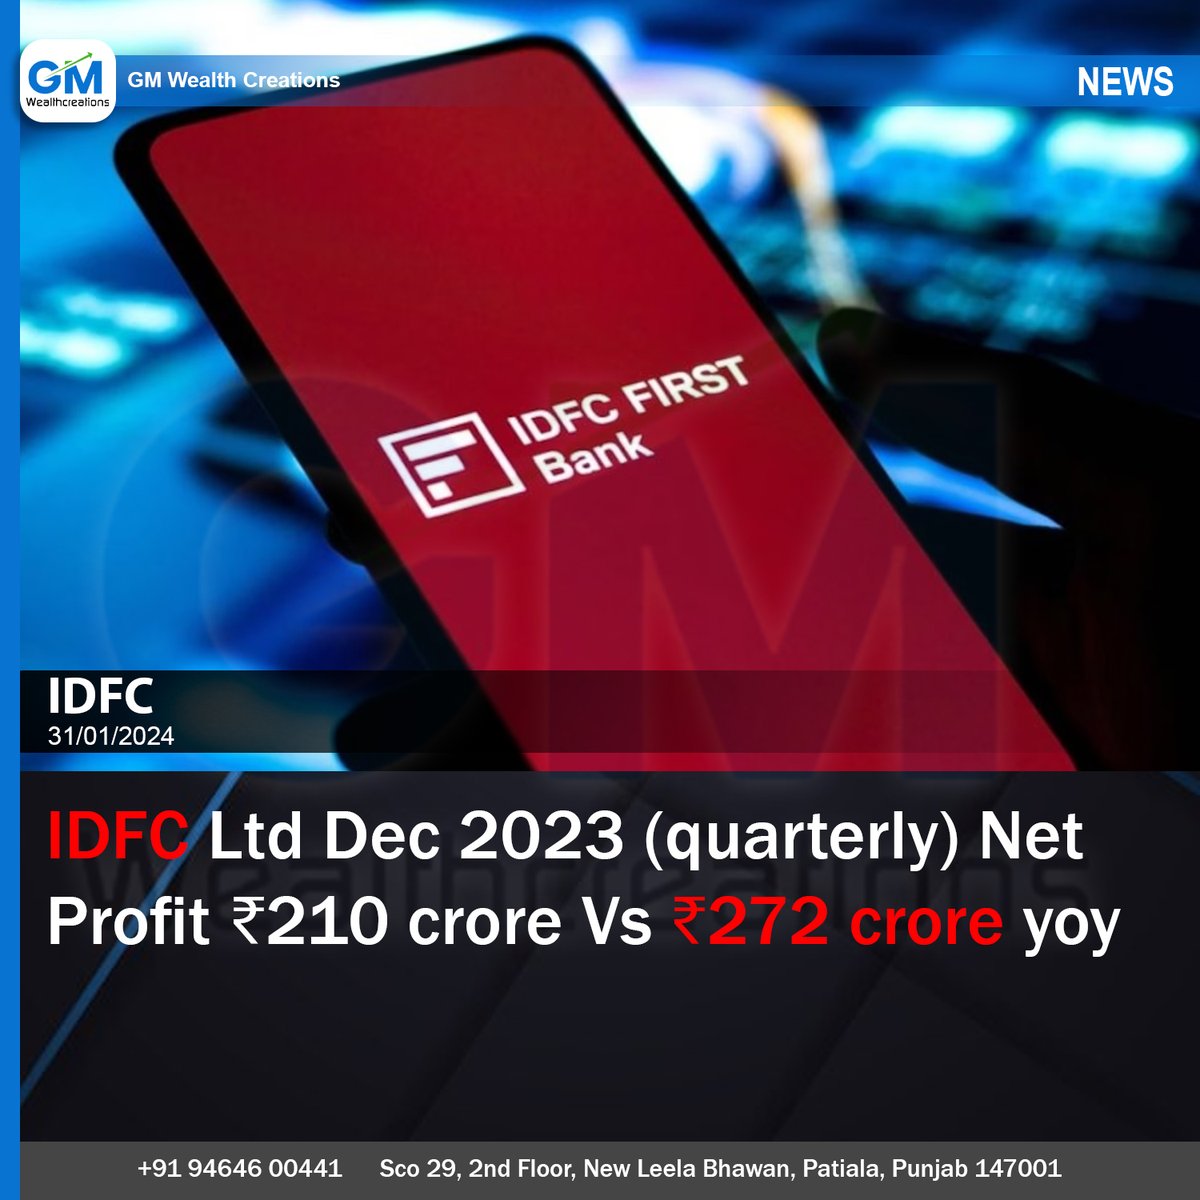 IDFC Ltd Dec 2023 (quarterly) Net Profit ₹210 crore Vs ₹272 crore yoy
#IDFCFIRSTBank #idfcFirst  #ProfitandLoss